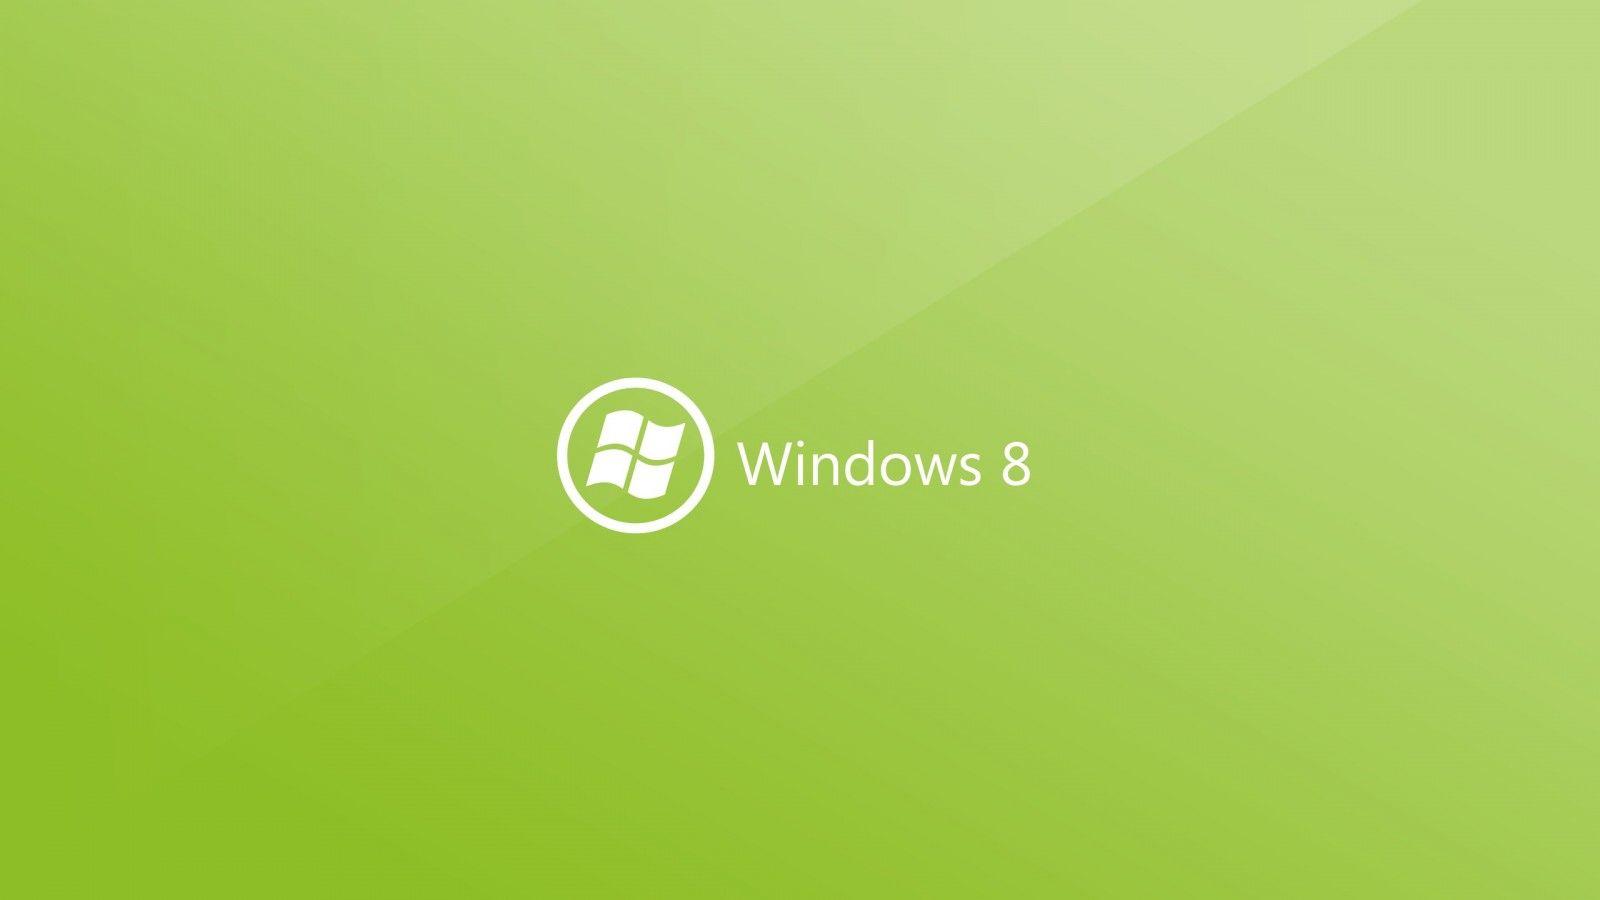 With Green Circle Brand Logo - Wallpaper : text, logo, green, circle, Microsoft Windows, brand ...